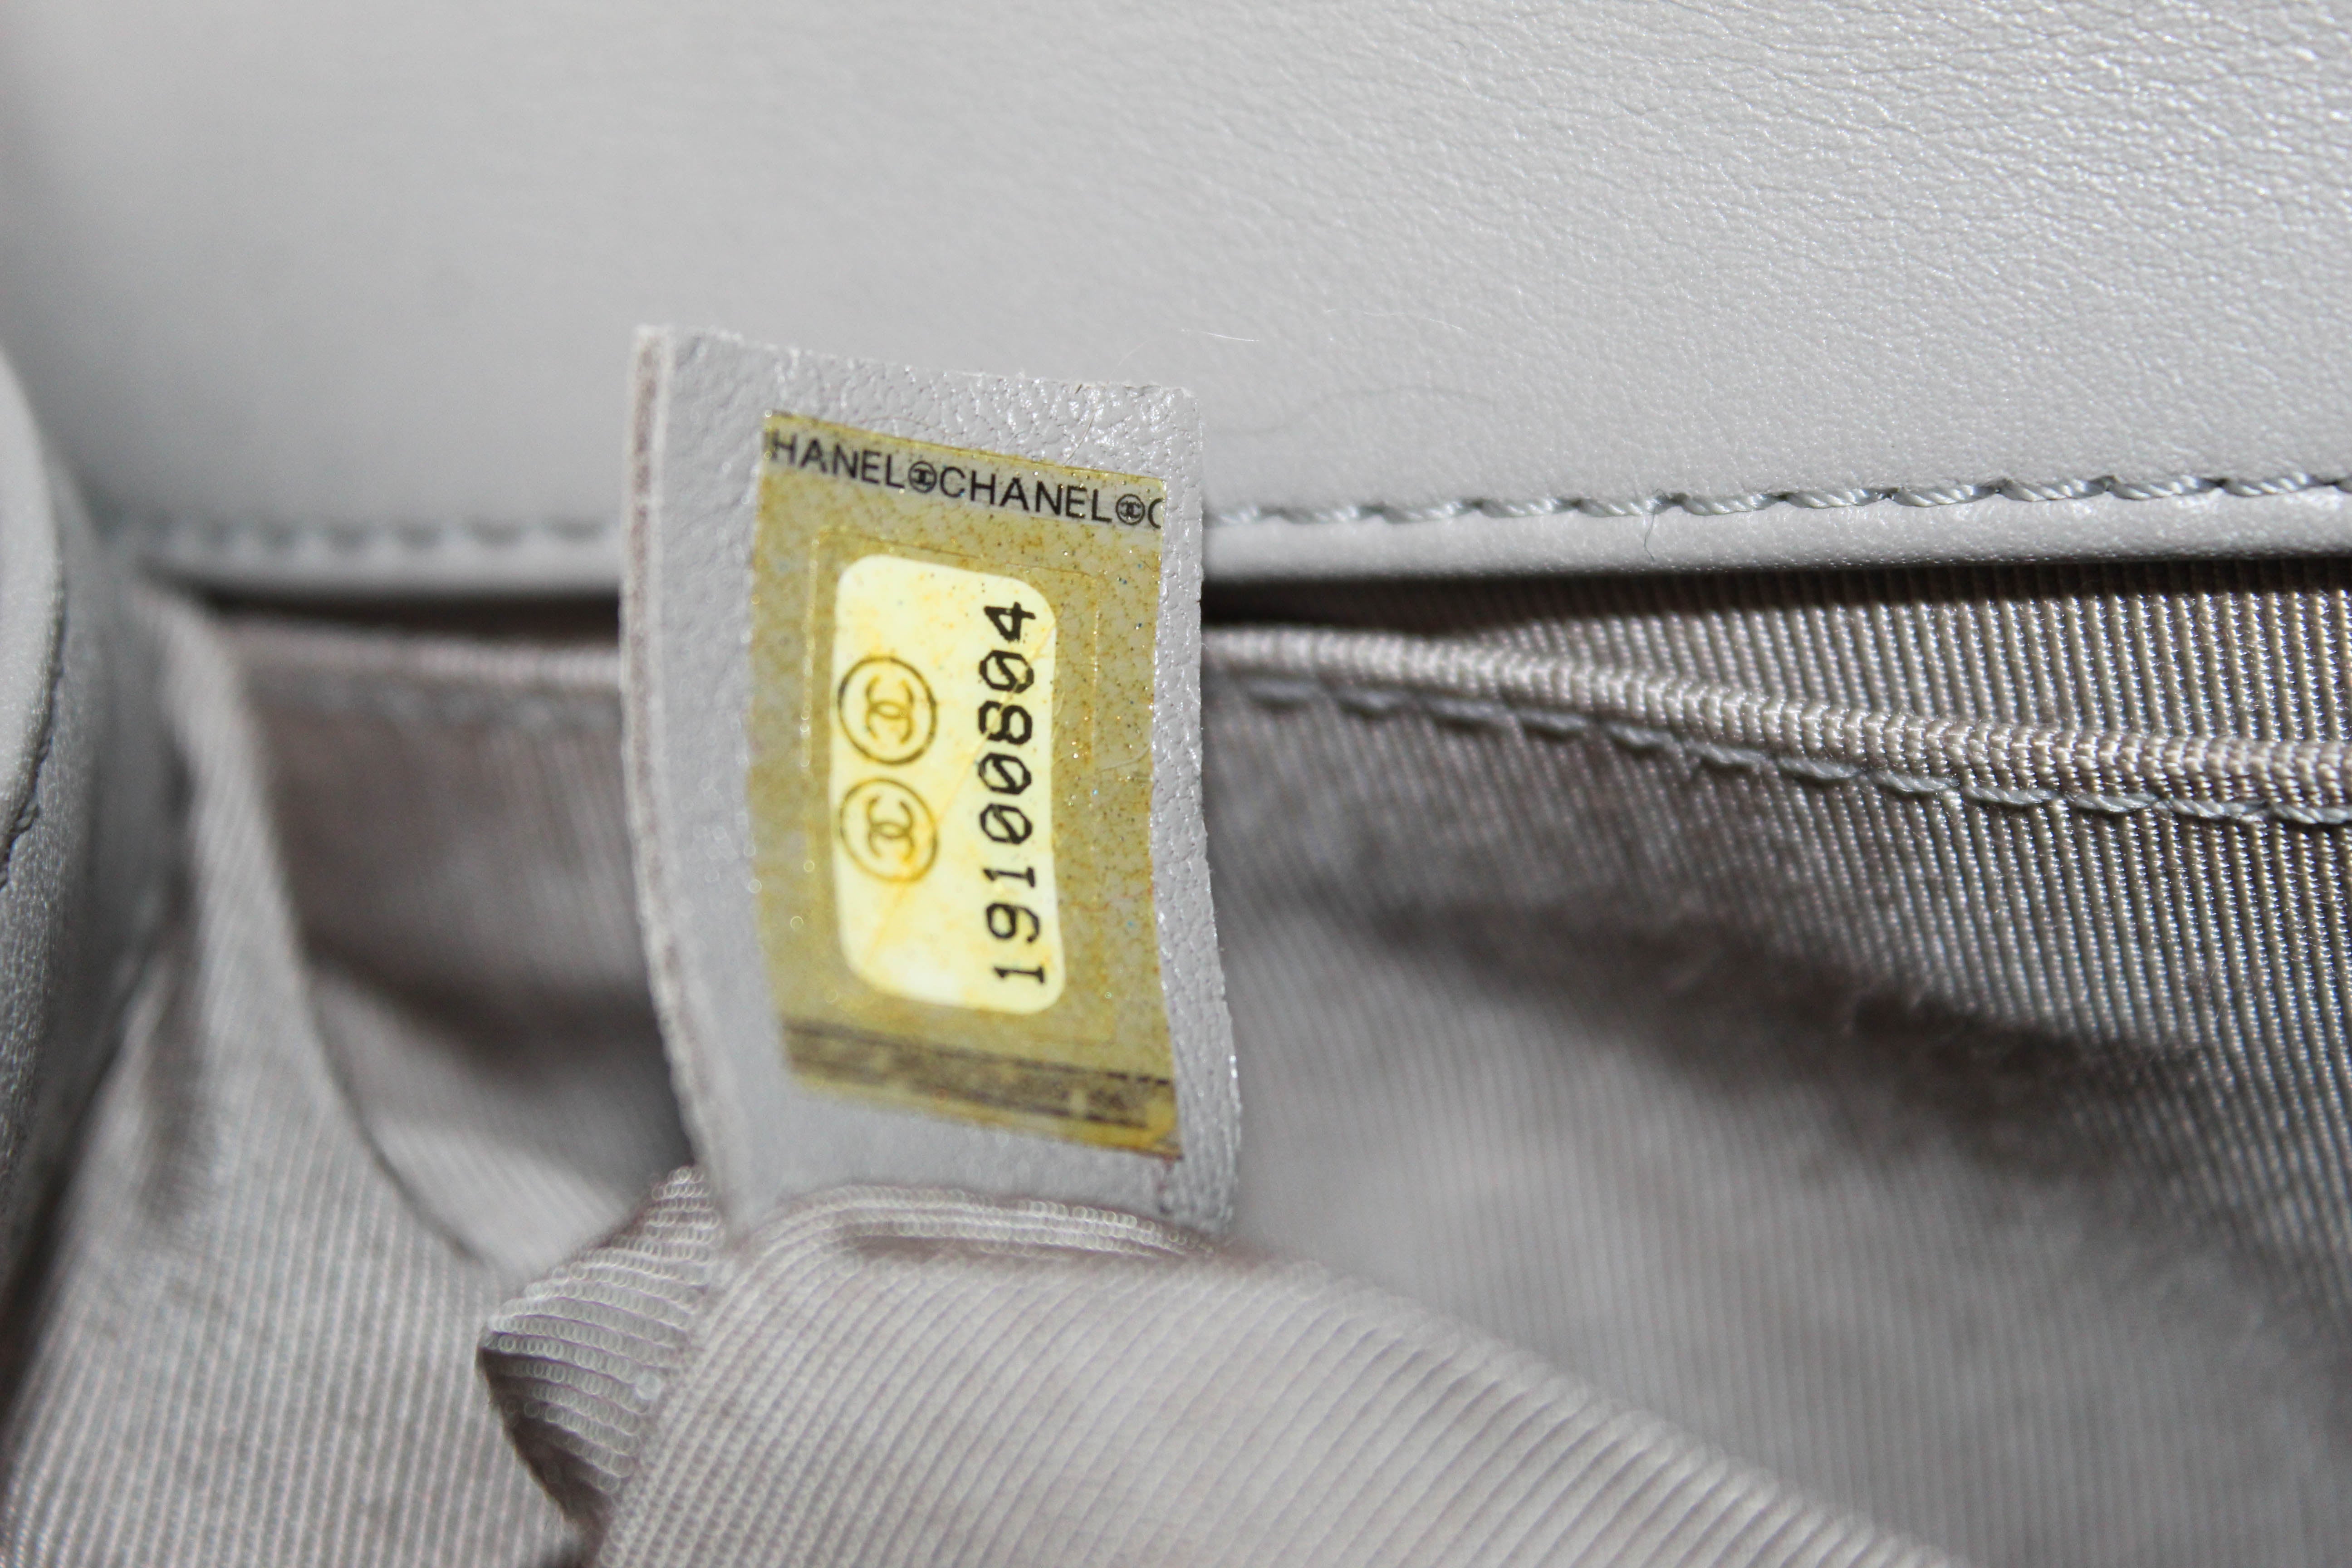 Authentic Chanel Grey Calfskin Quilted Old Medium Boy Chanel Shoulder Messenger Bag